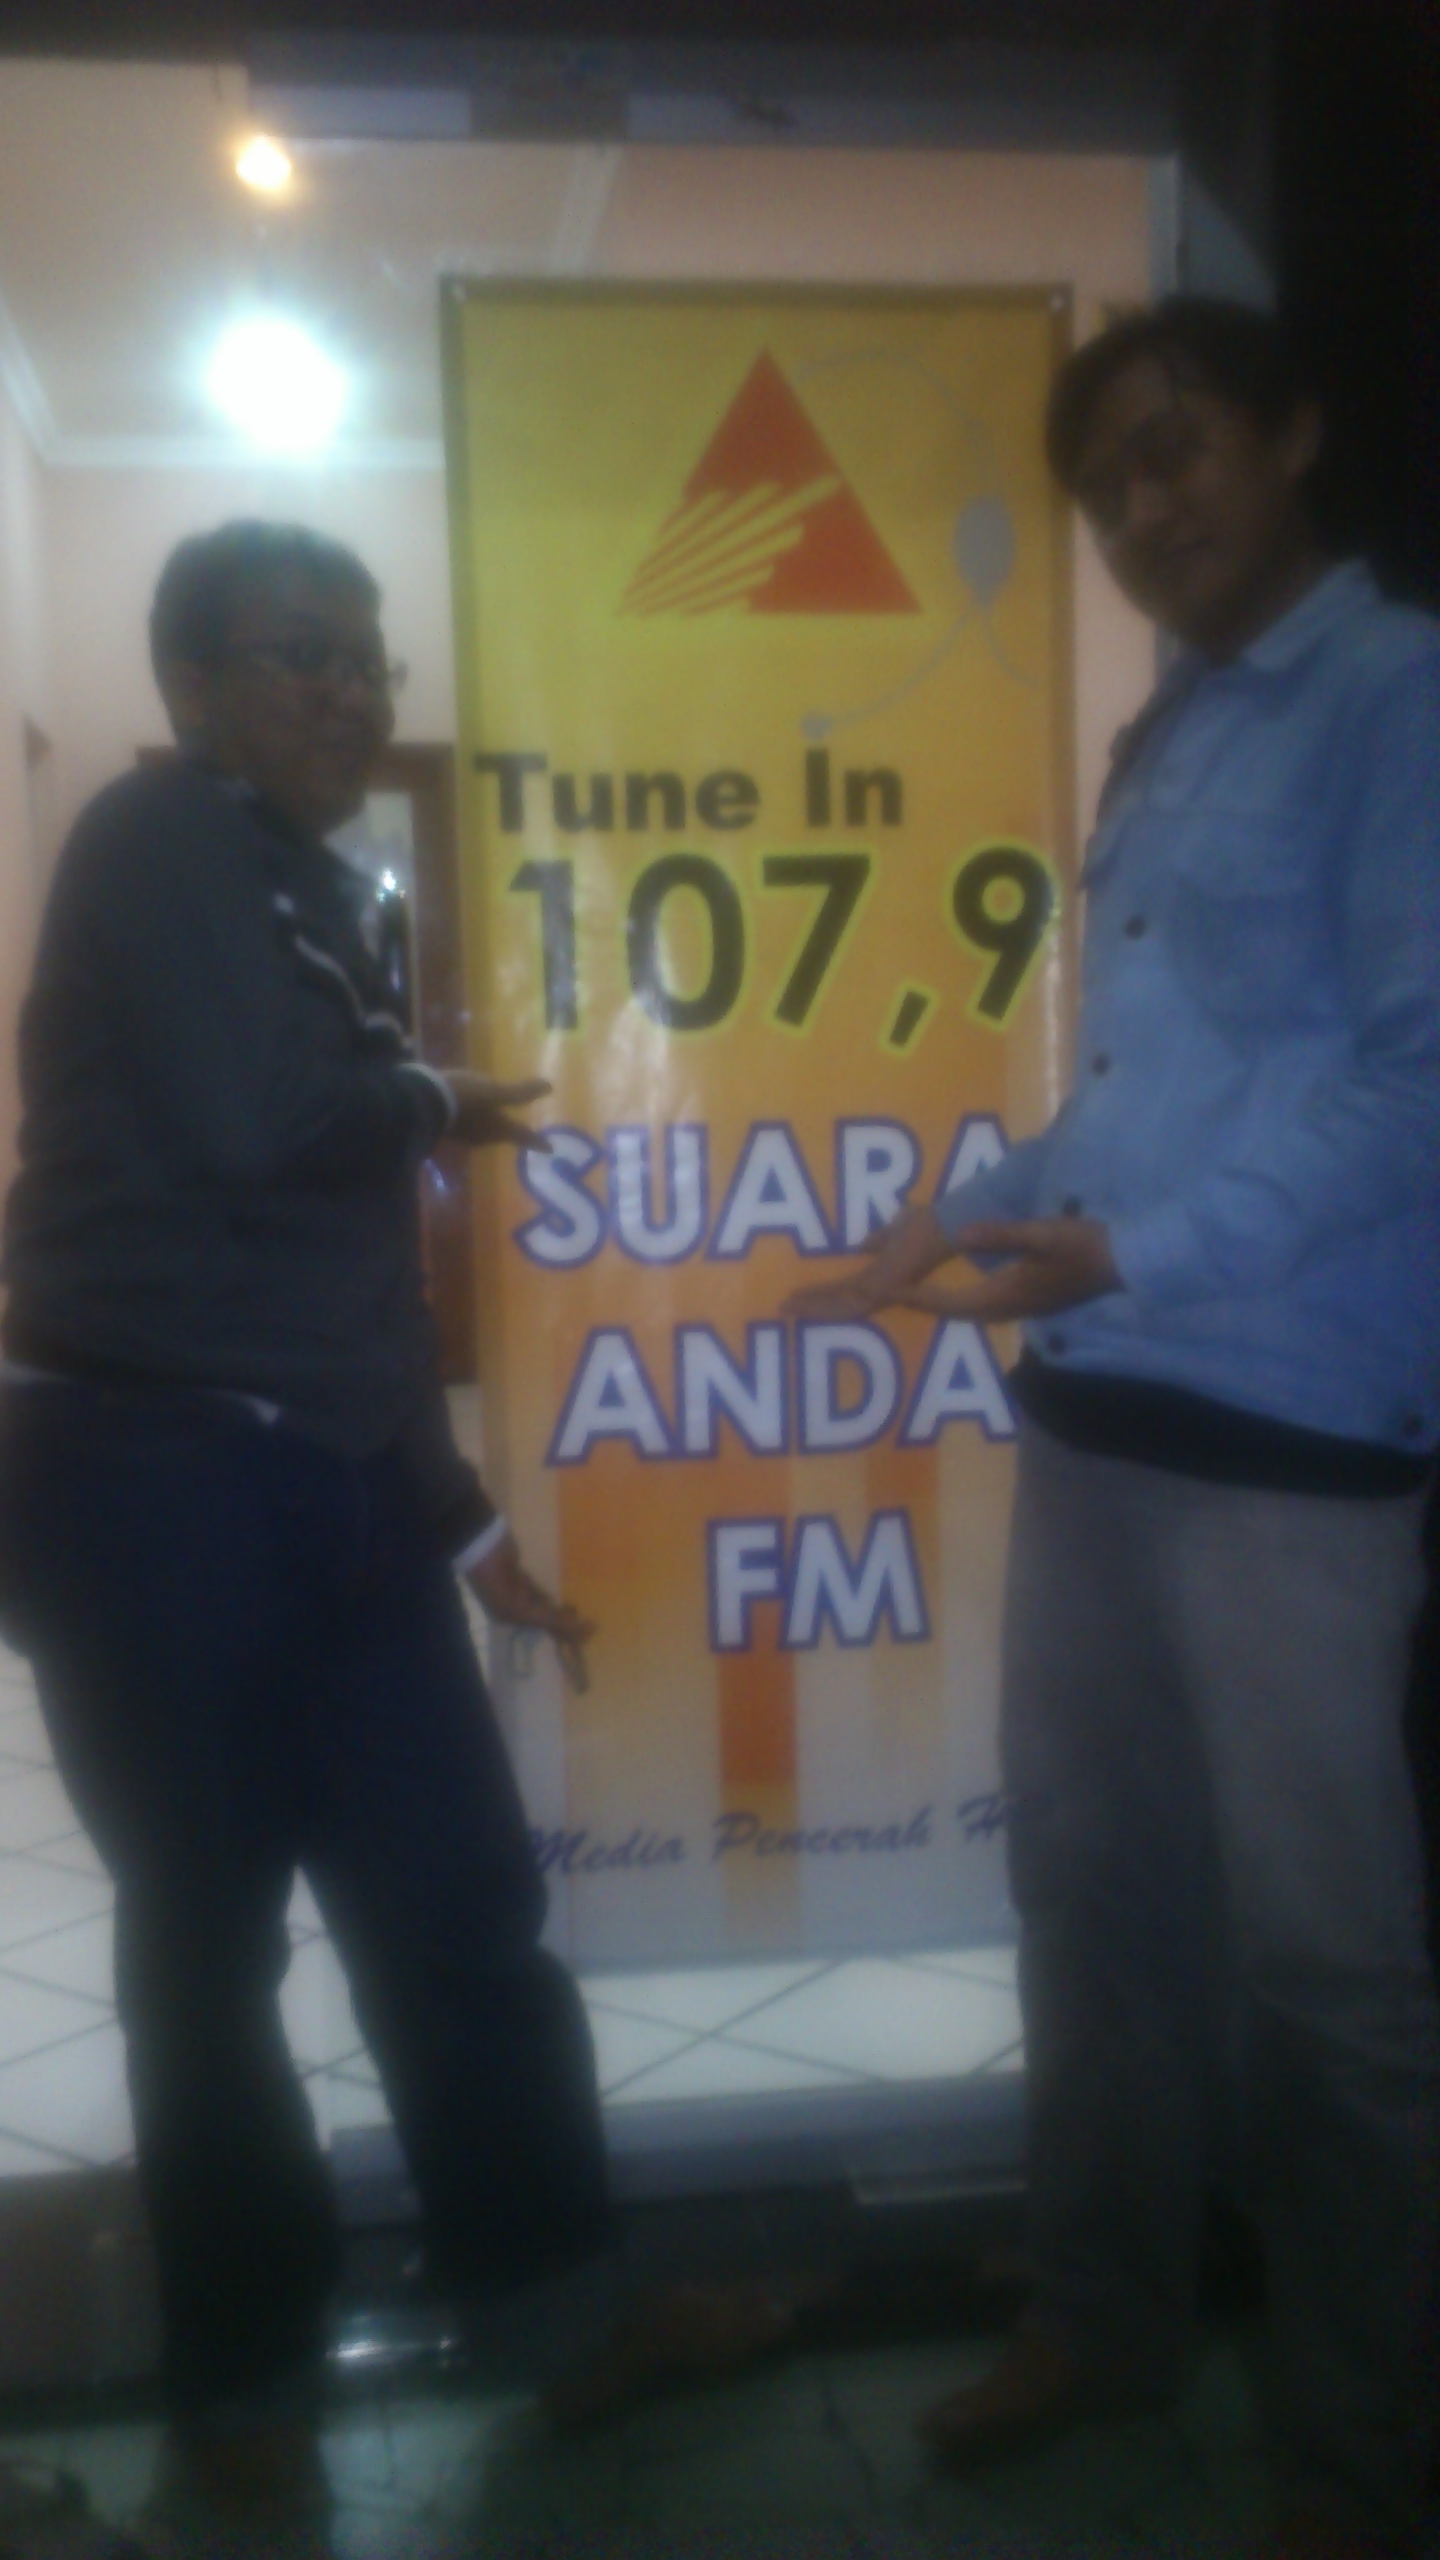 Radio Swara Anda